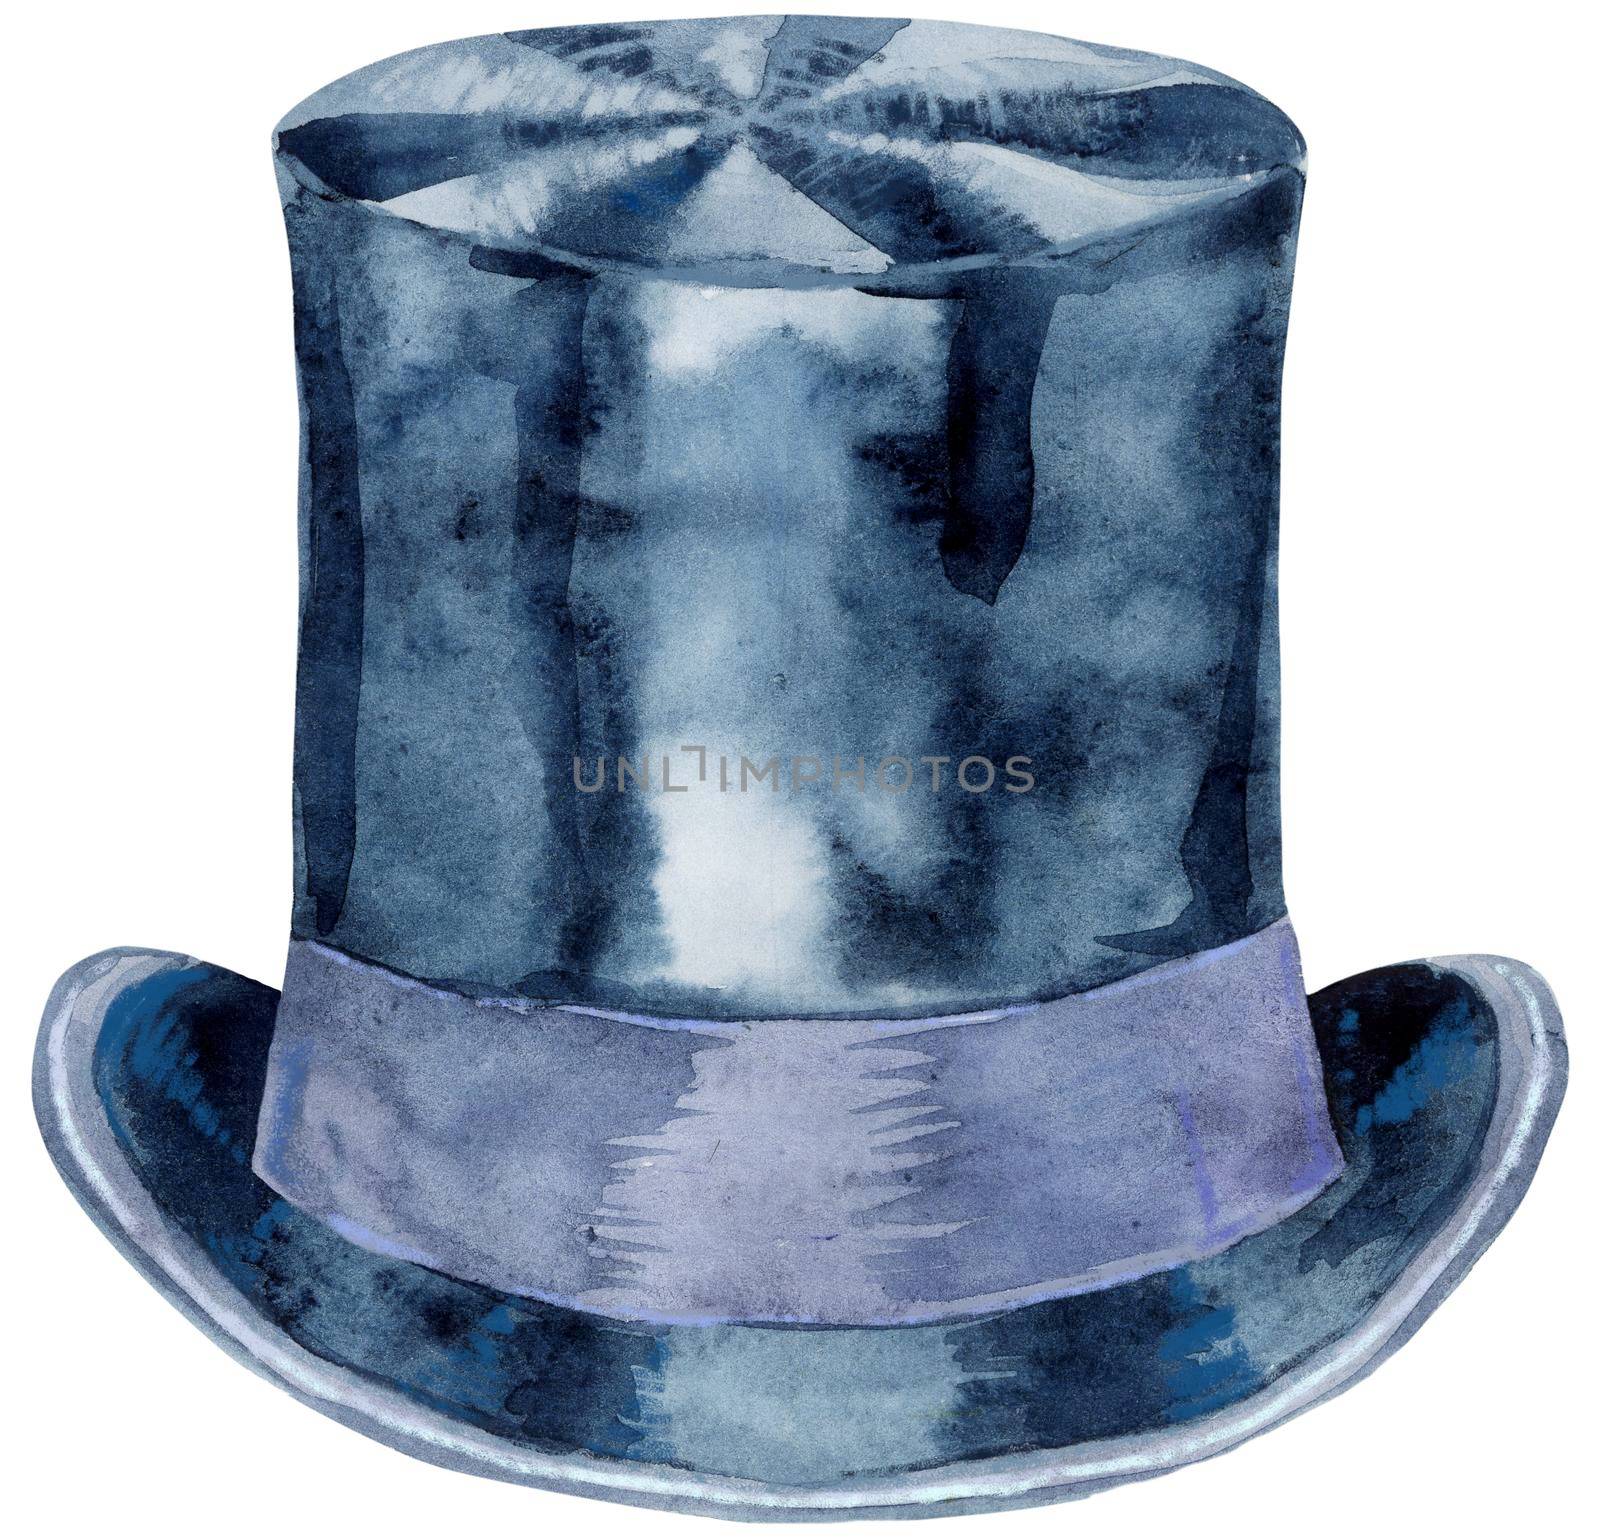 Watercolor black hat topper illustration. For clothing design